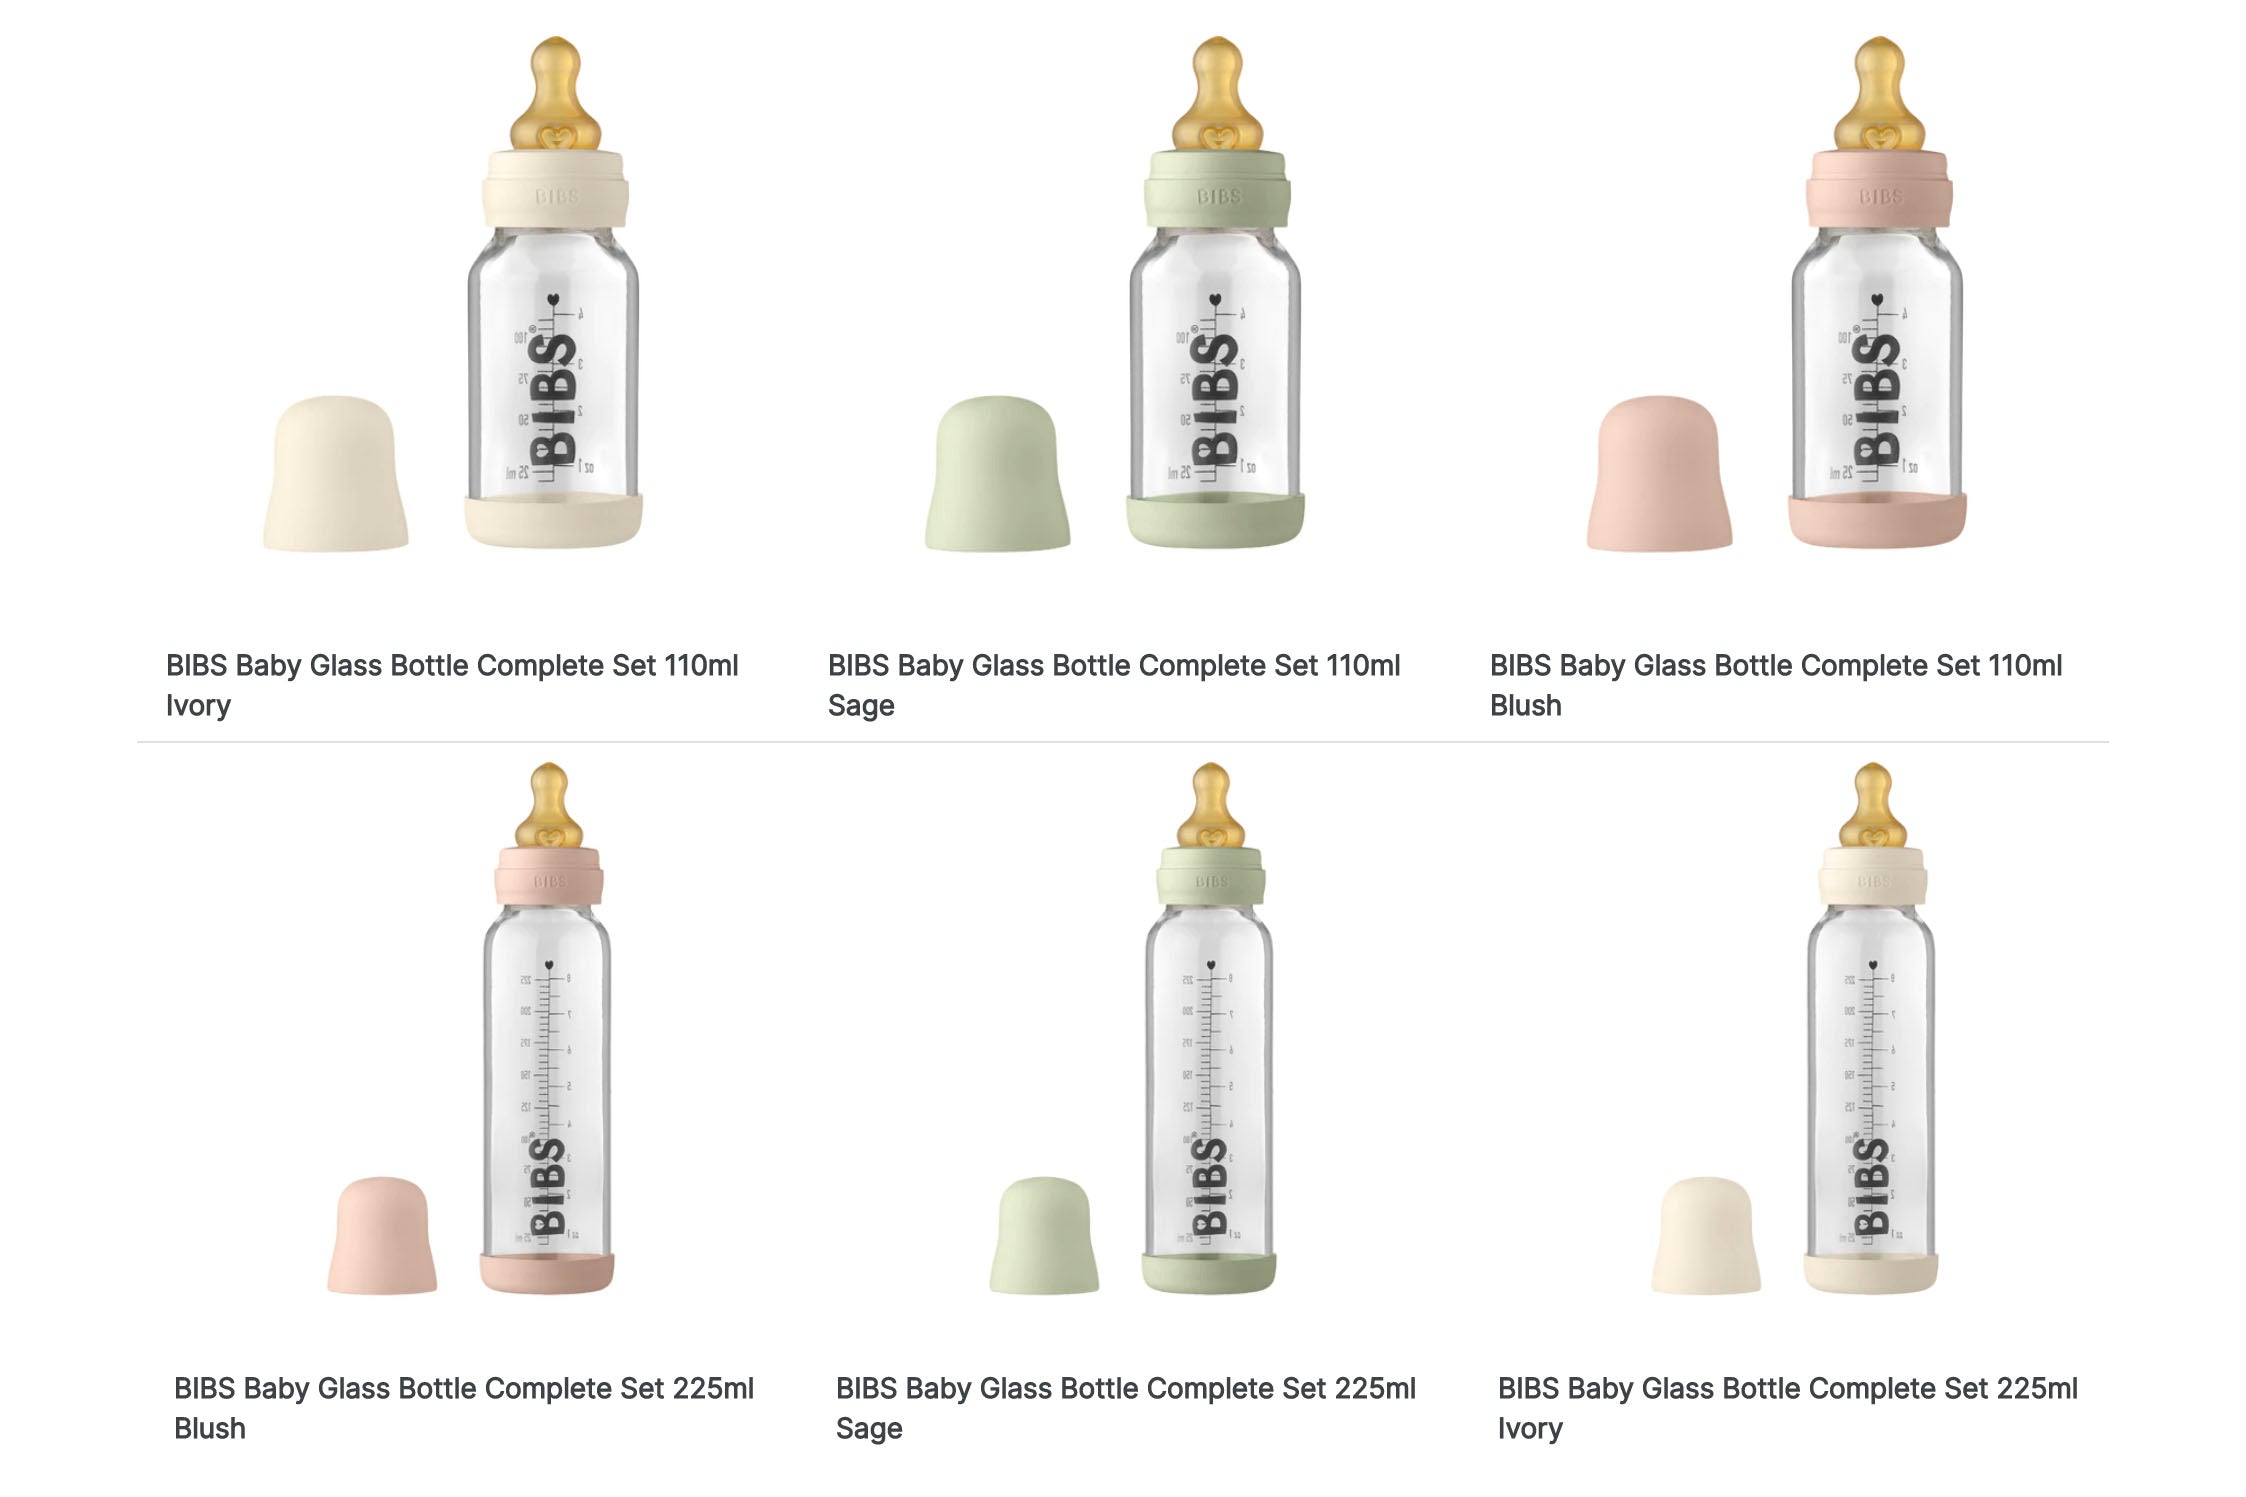 BIBS Baby Glass Bottle Complete Set 110ml or 225ml Blush, sage, ivory